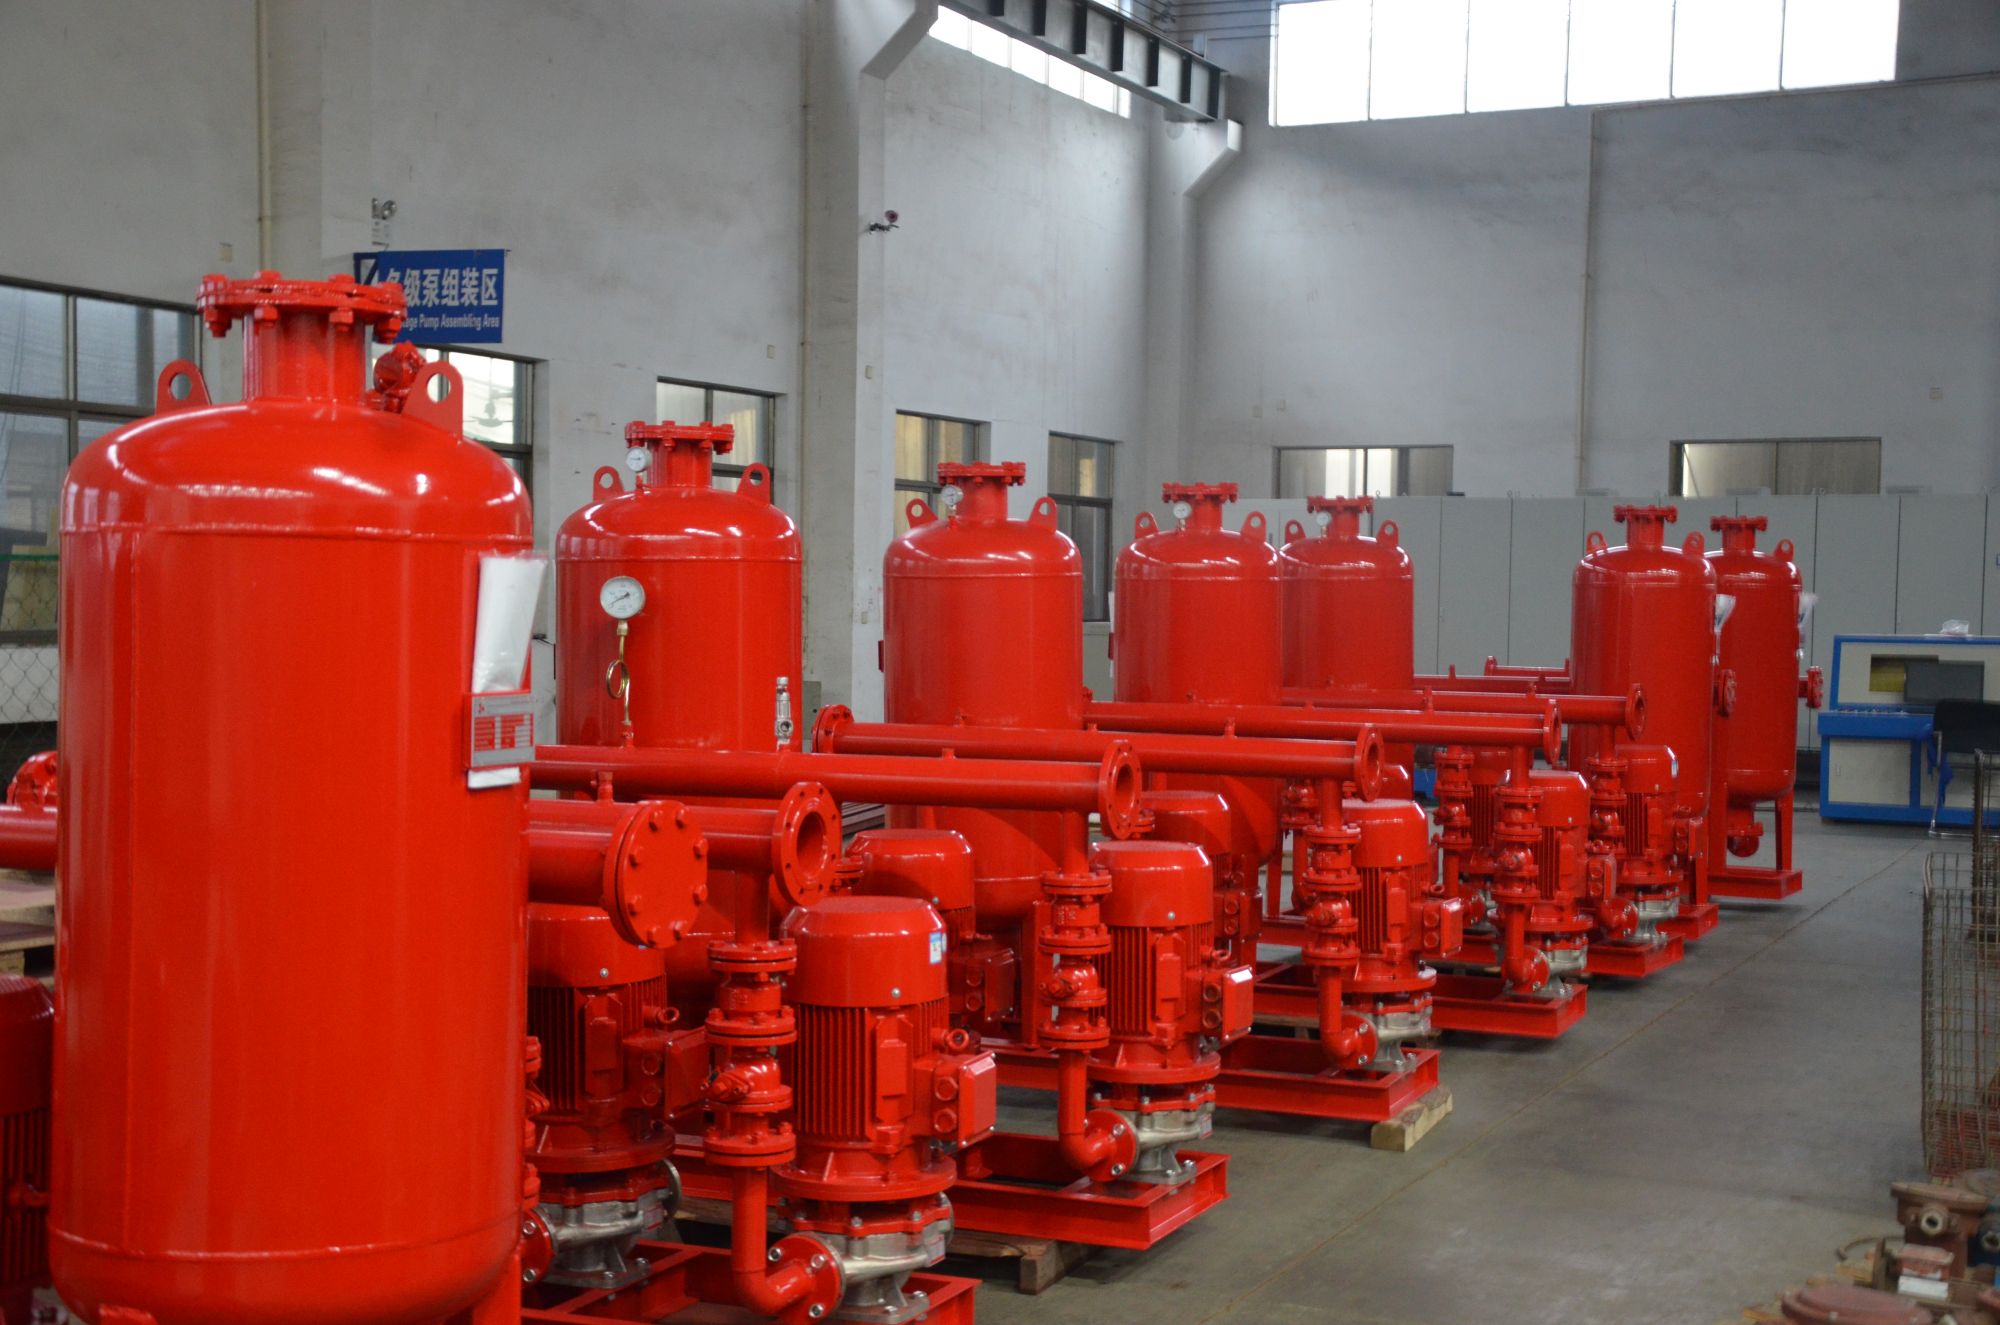 Fire water supply equipment